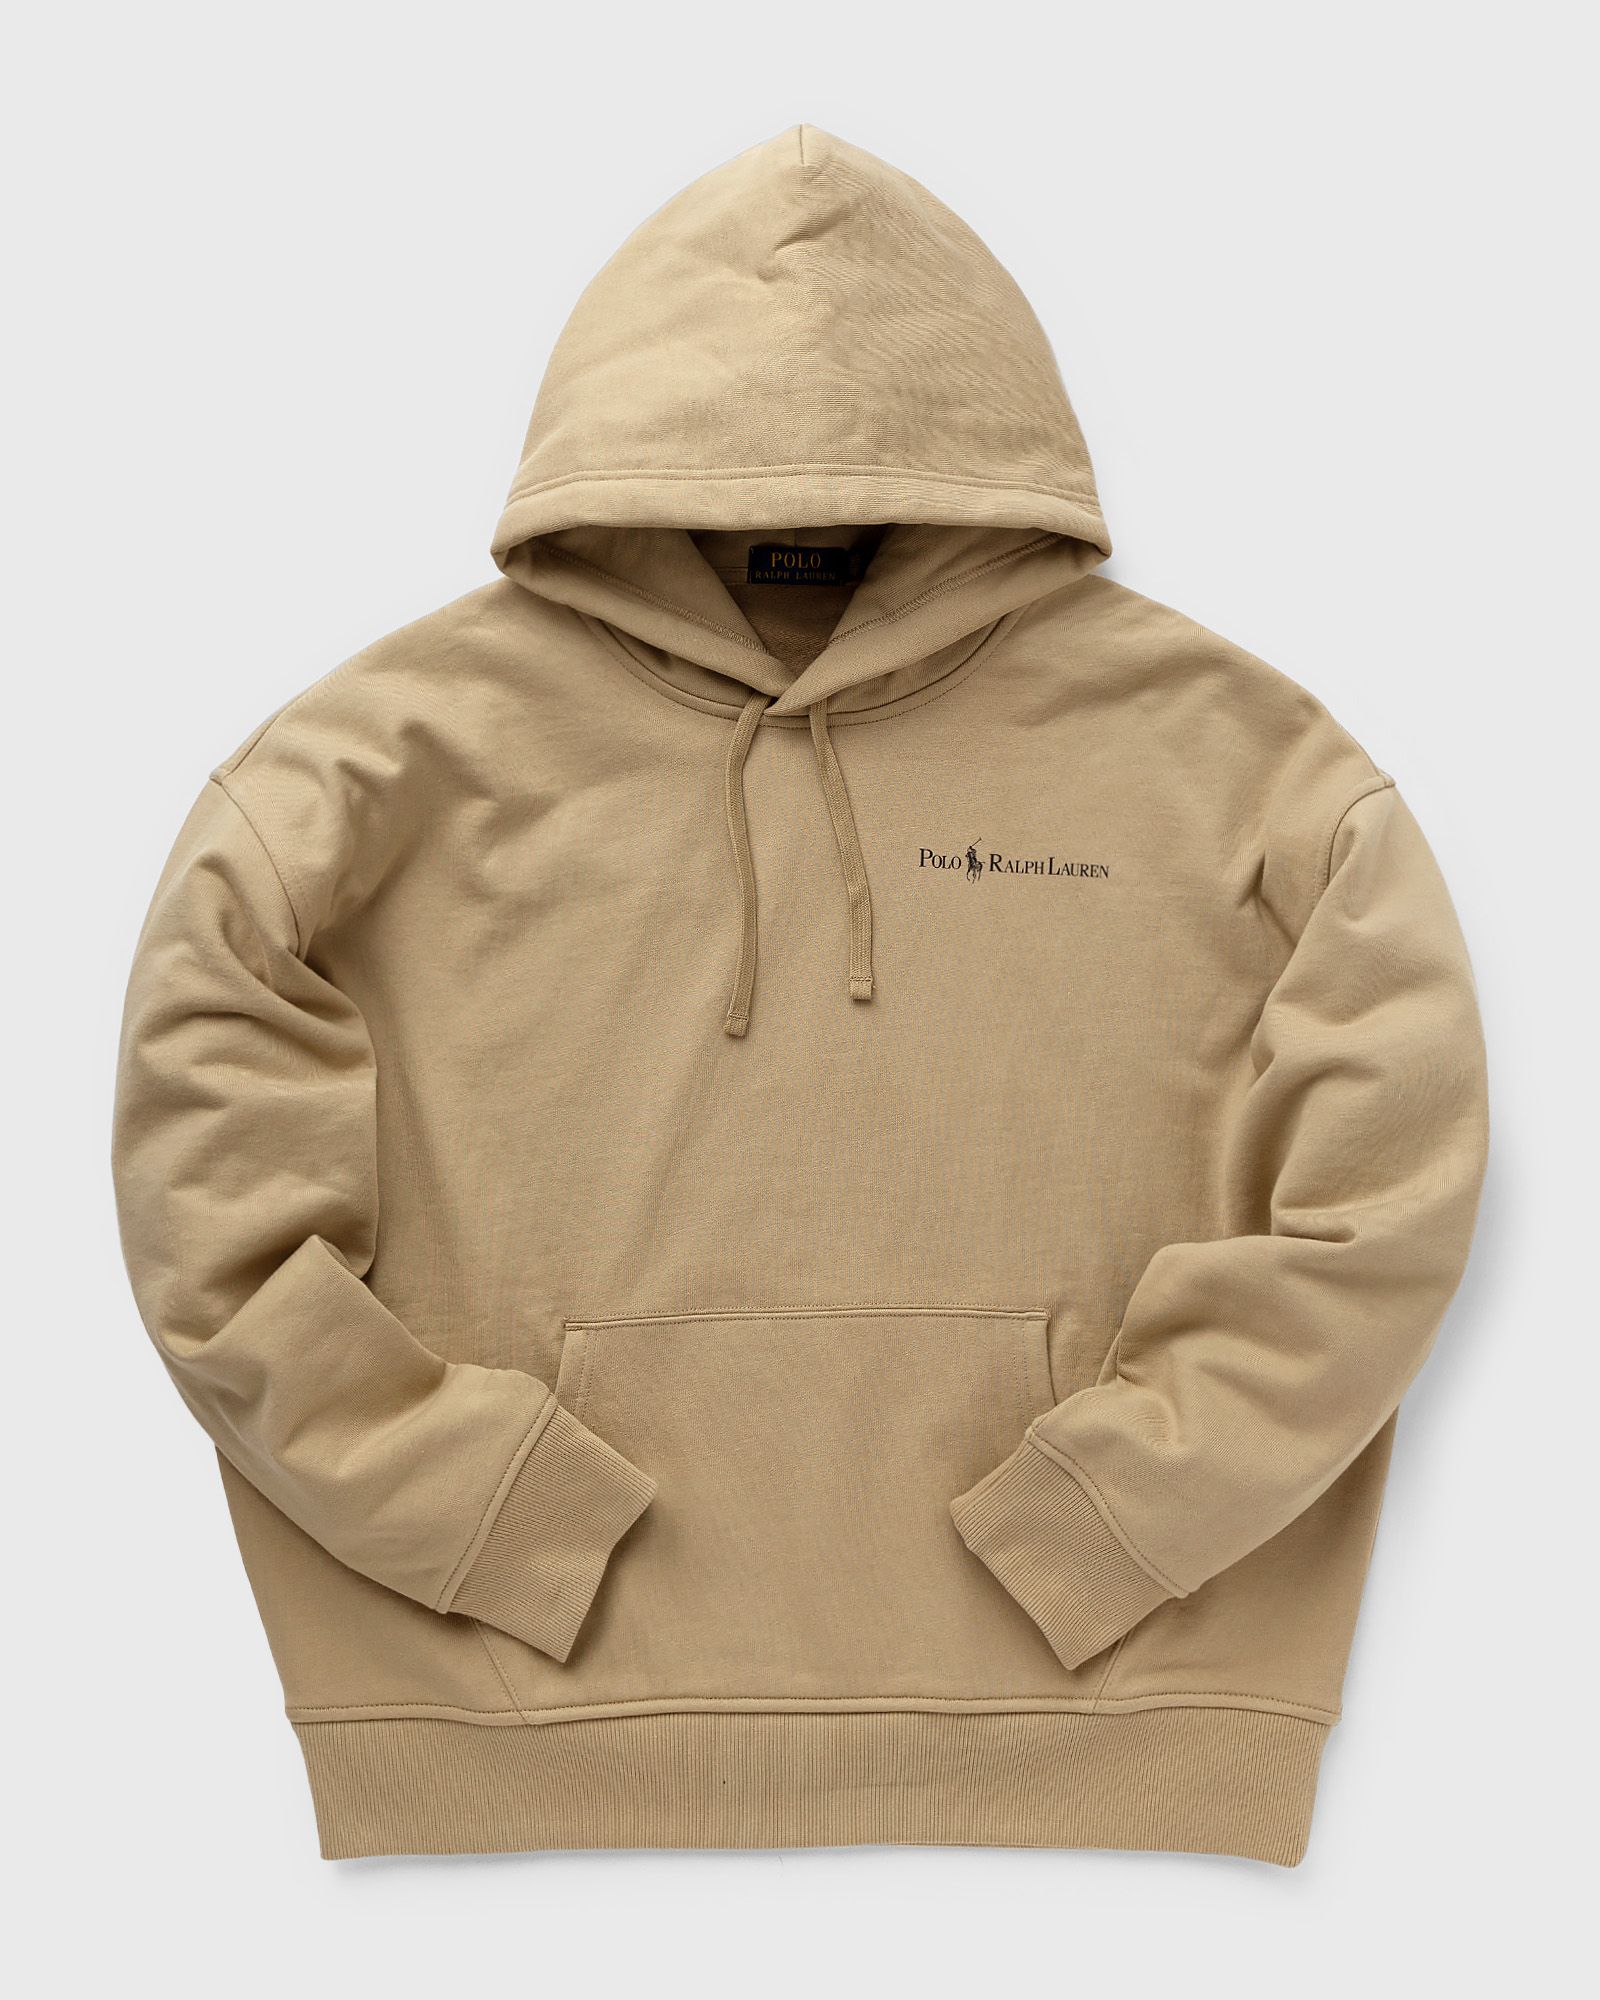 Polo Ralph Lauren - lspohoodm1-long sleeve-sweatshirt men hoodies brown in größe:xxl